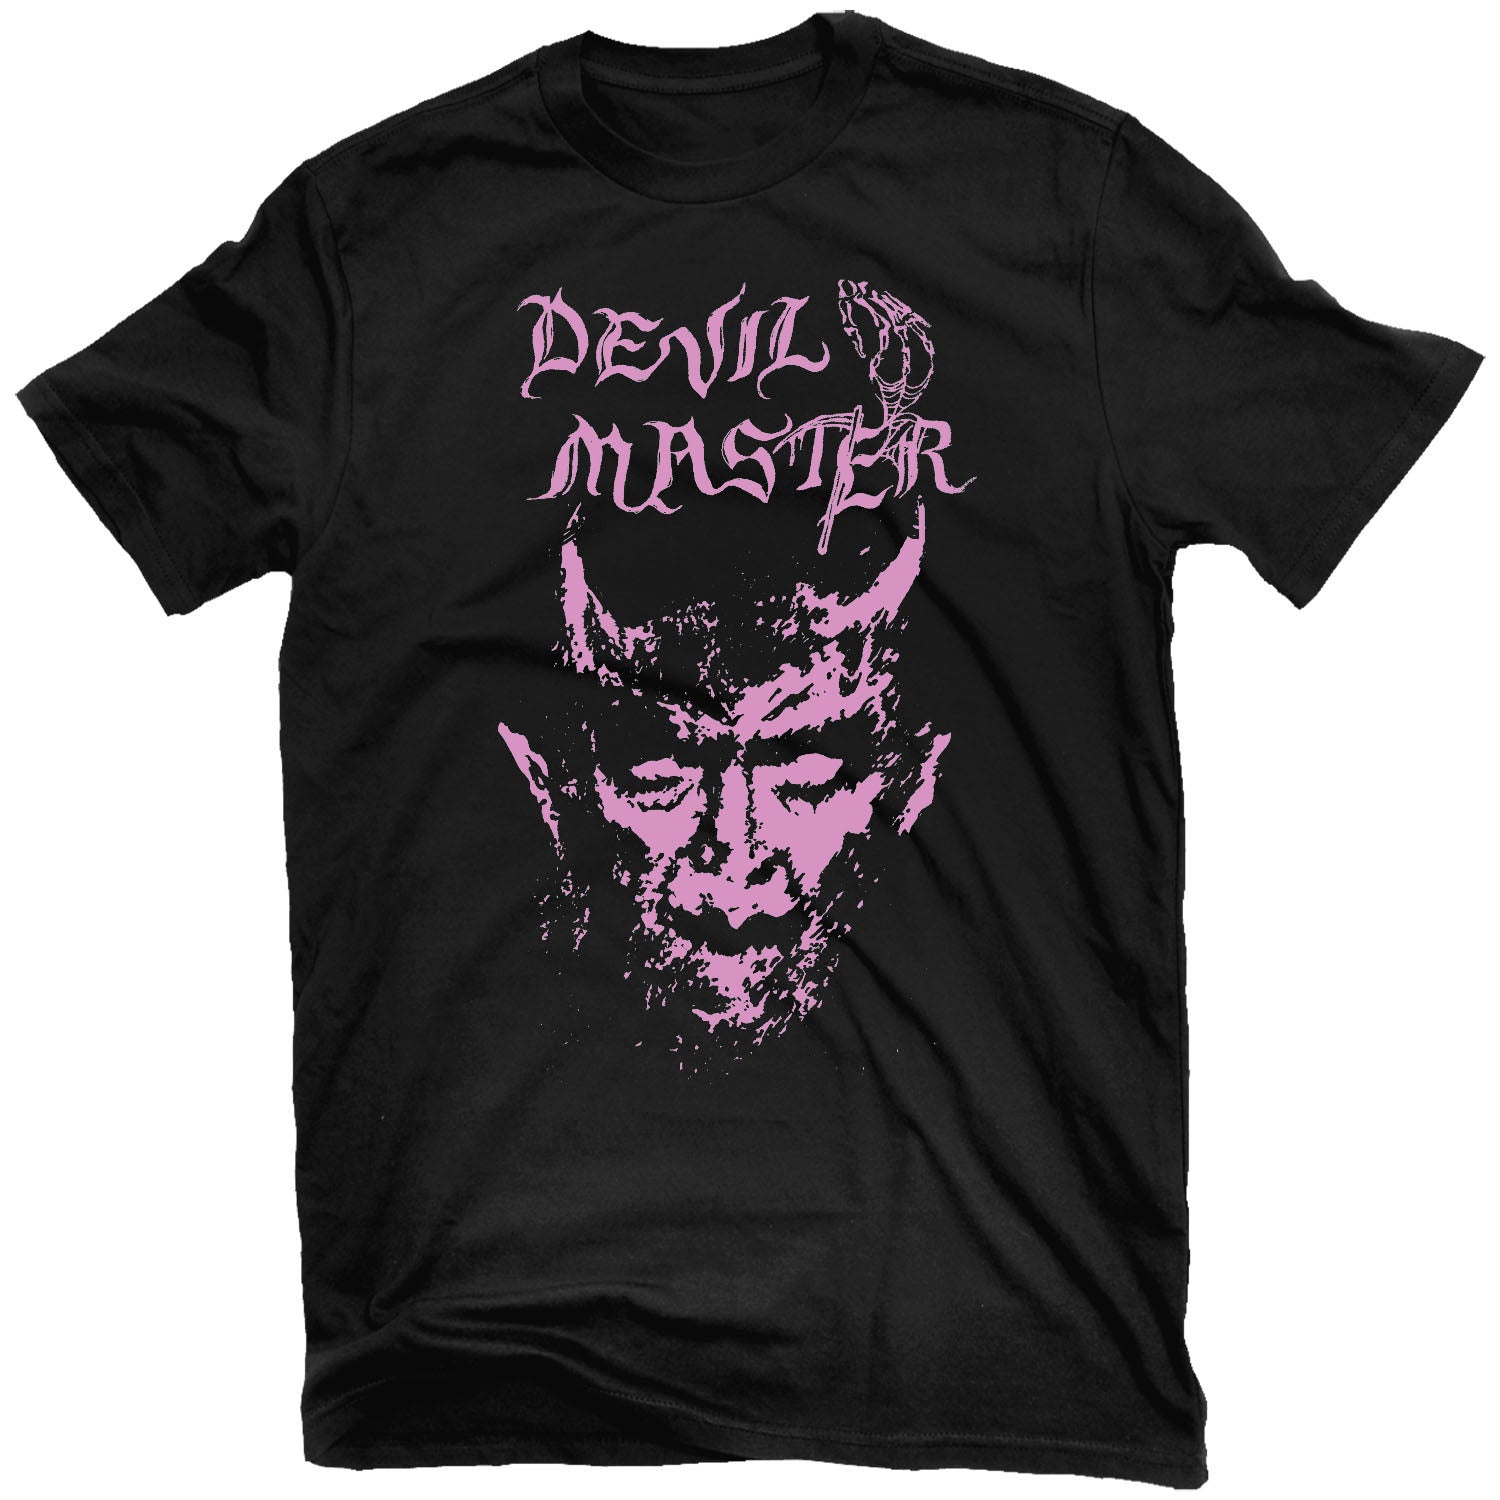 Devil Master "Manifestations" T-Shirt